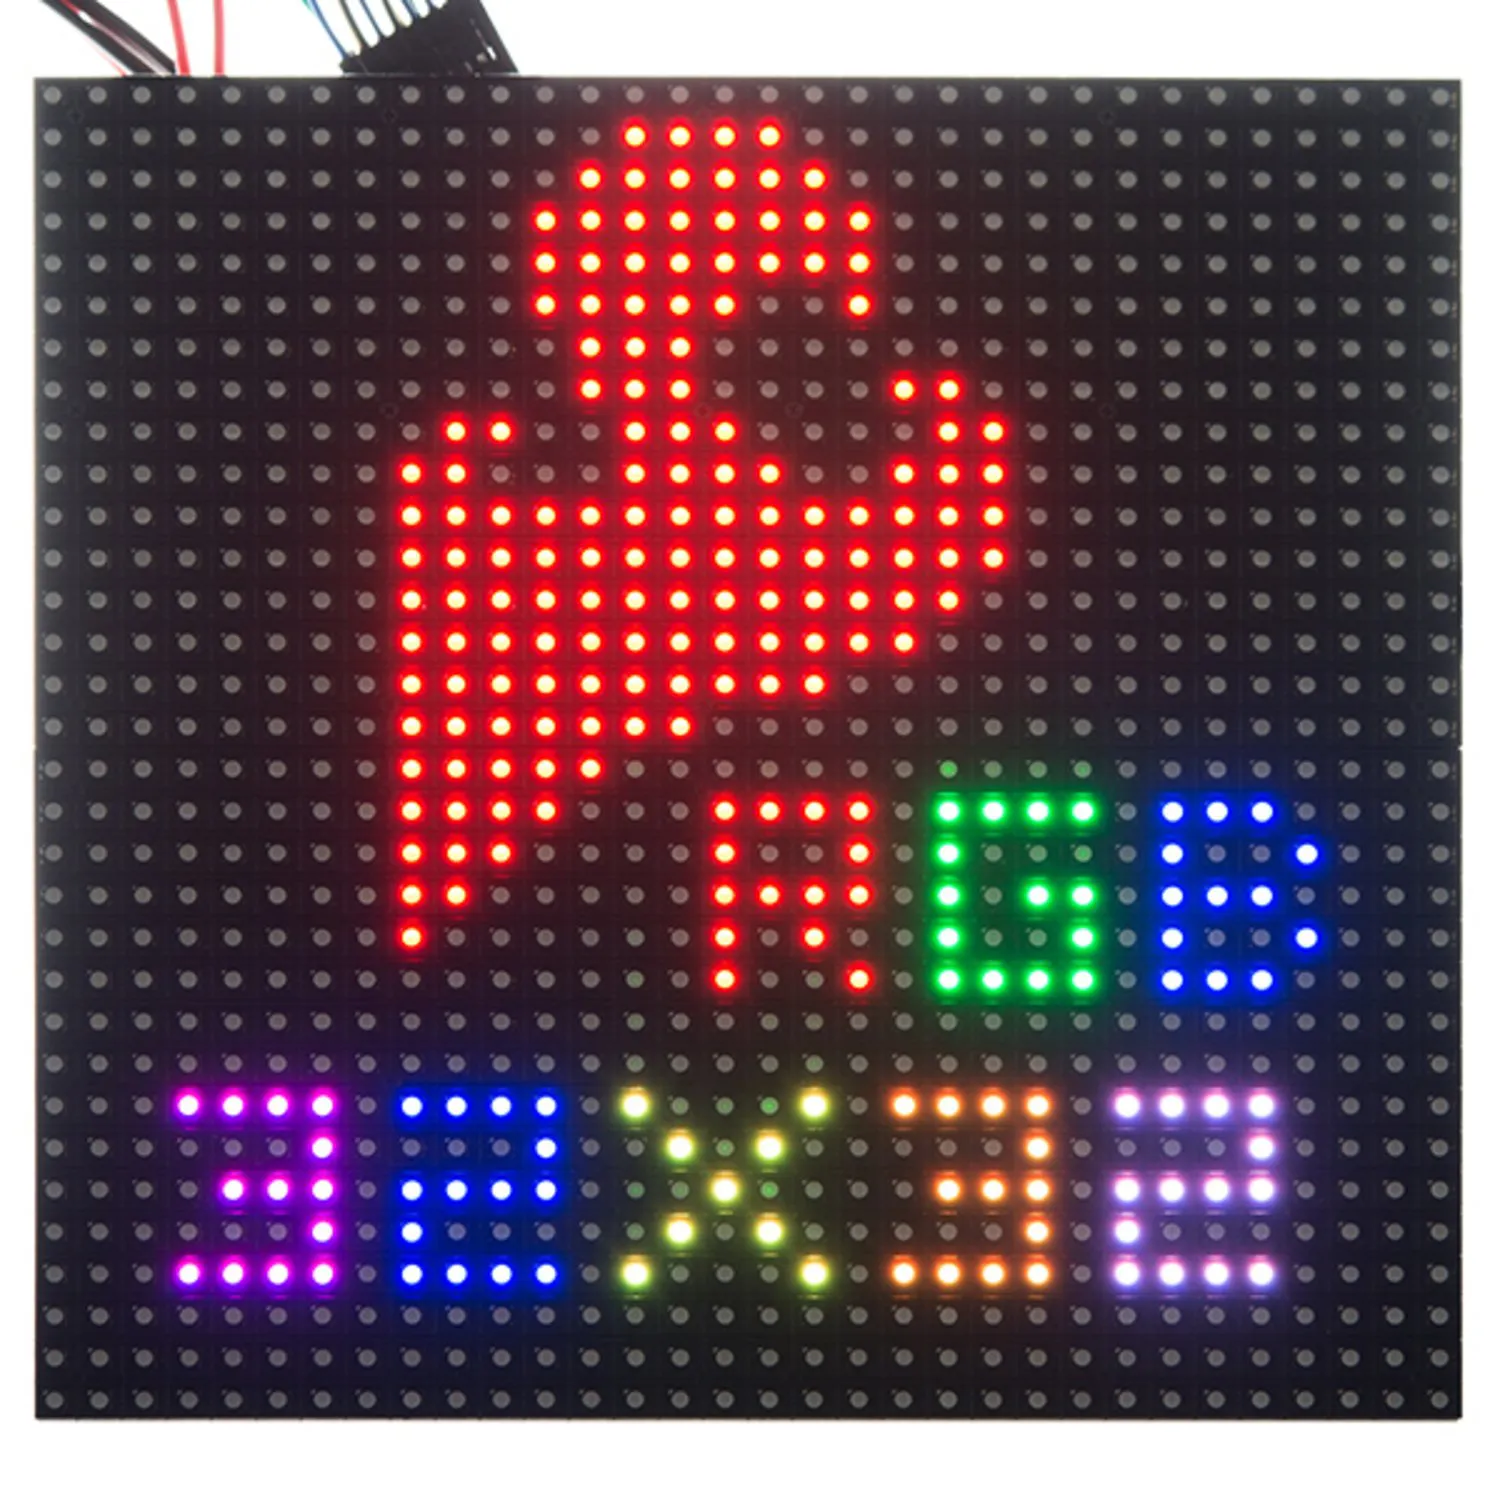 Photo of RGB LED Matrix Panel - 32x32